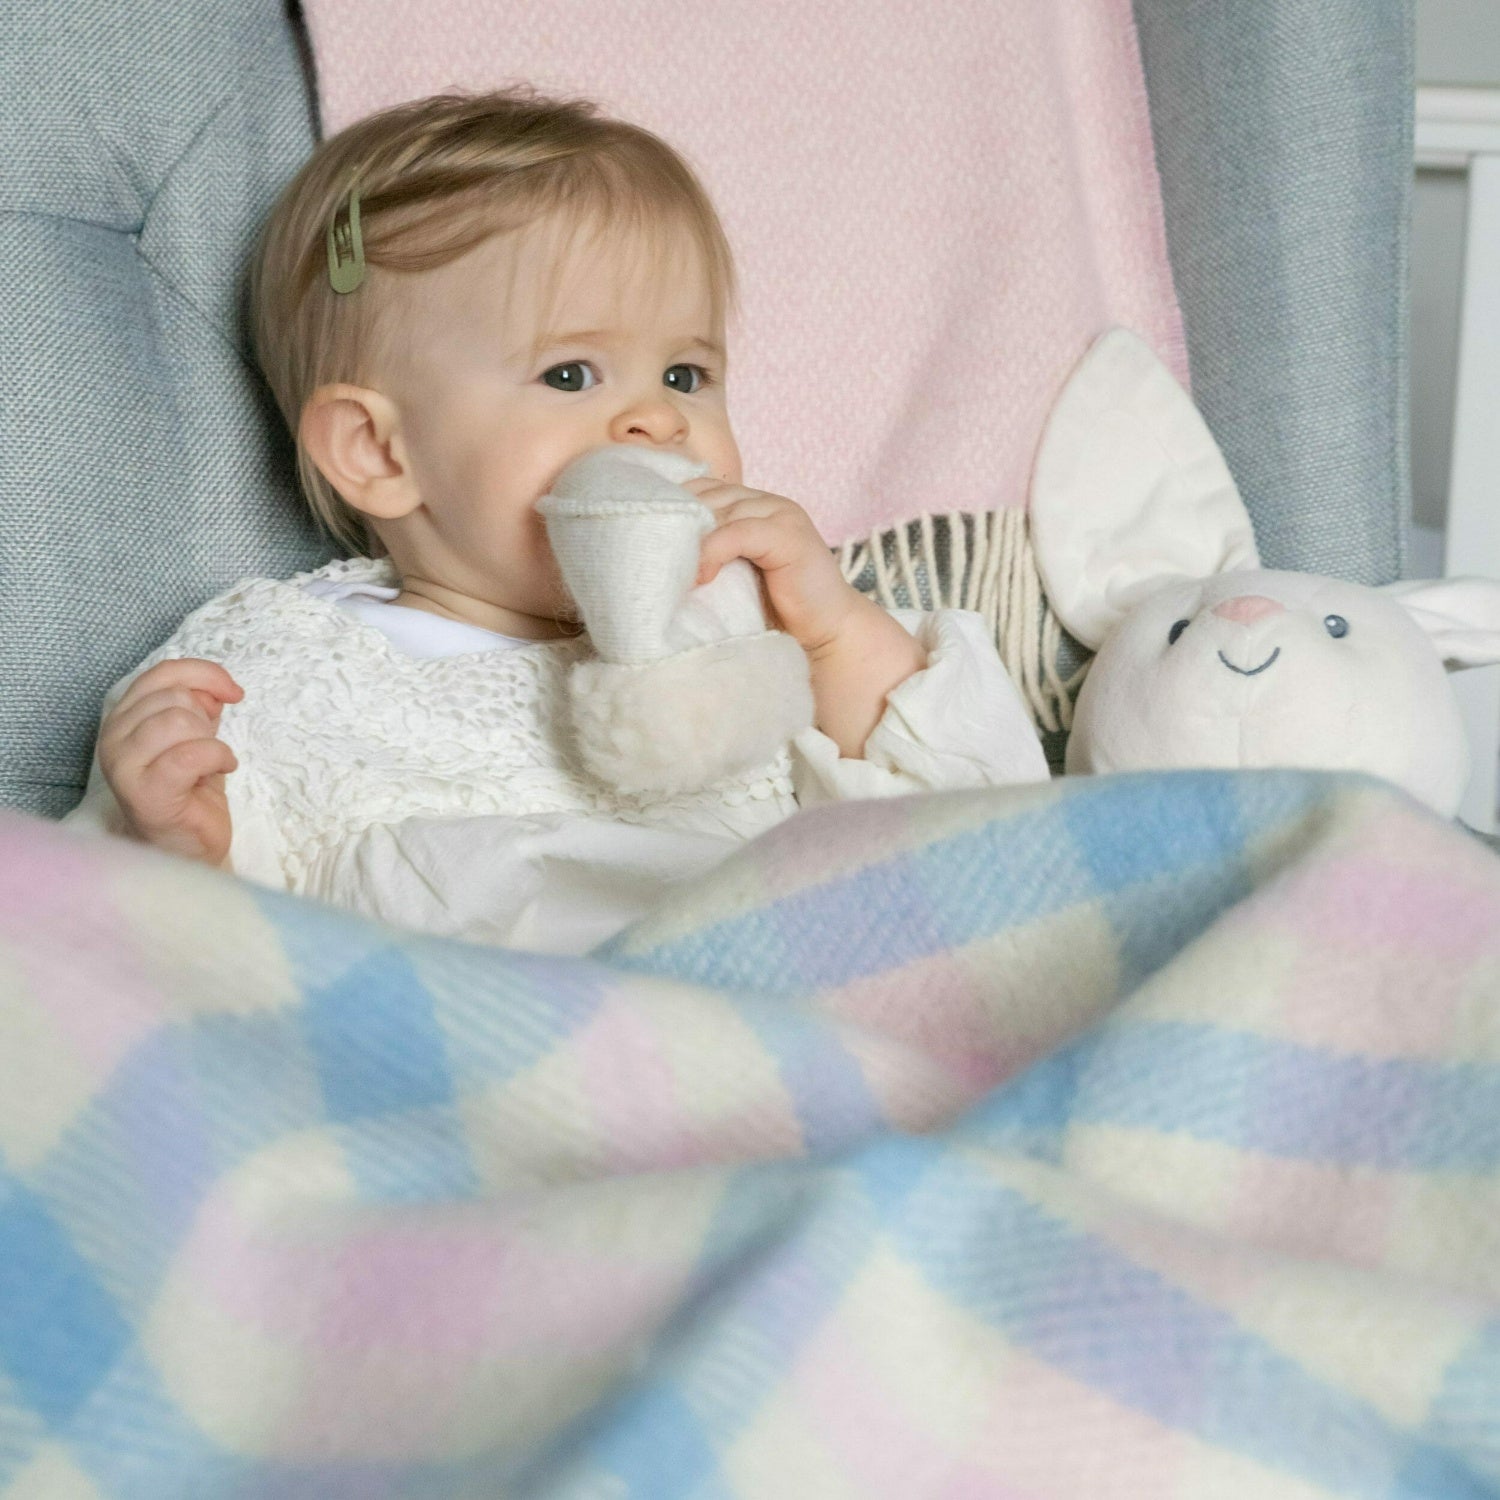 John Hanly Irish Wool Baby Blanket | White, Pink & Blue Border Block Check | 100% Pure Irish Wool Blanket | Lifestyle: Baby on Sofa with Blanket | BeoVERDE Ireland